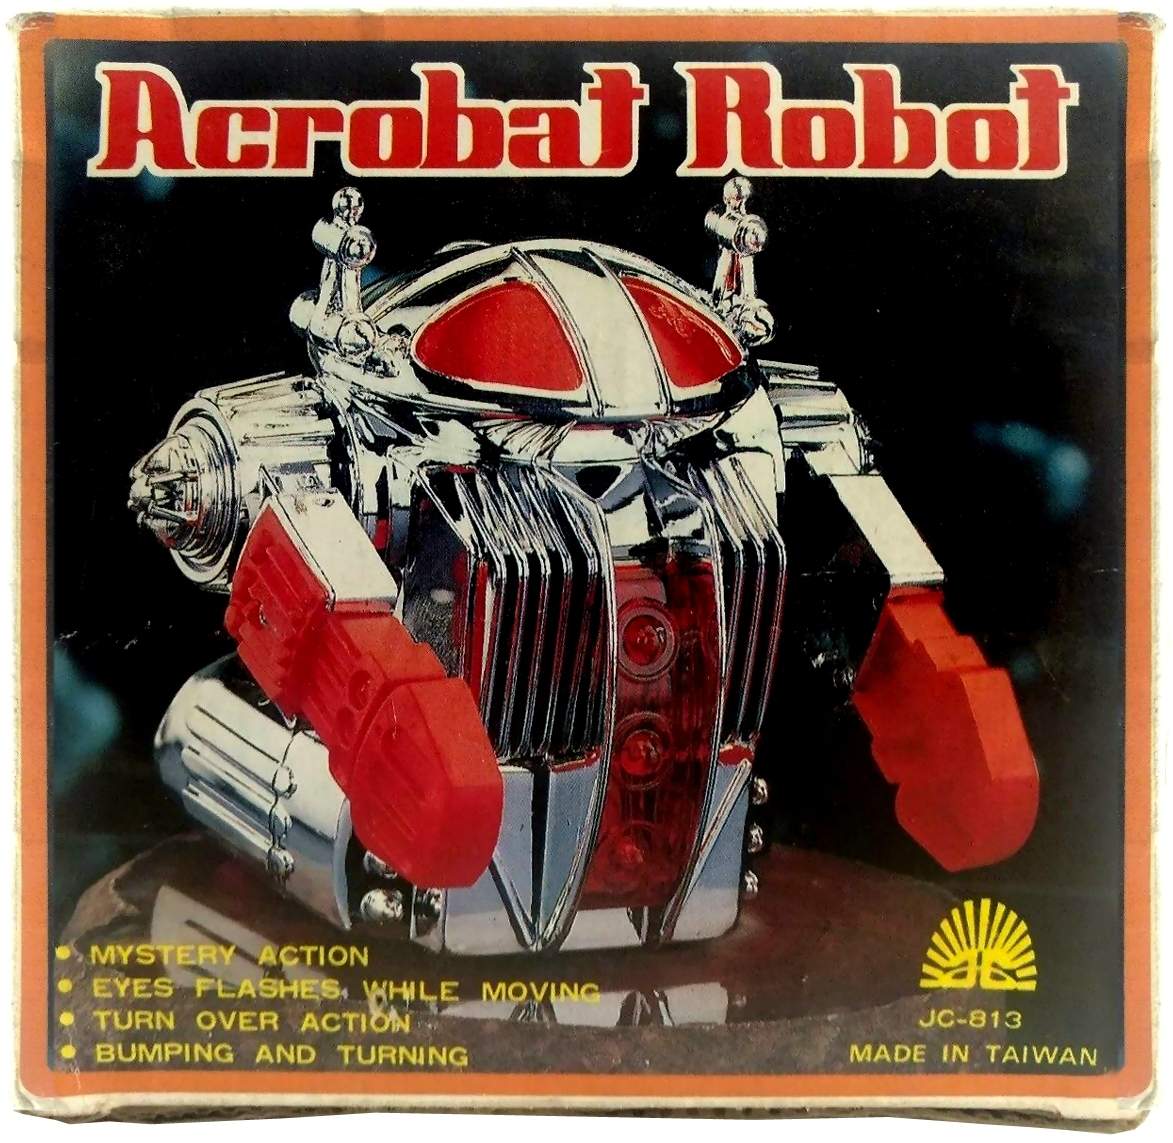 Acrobat Robot